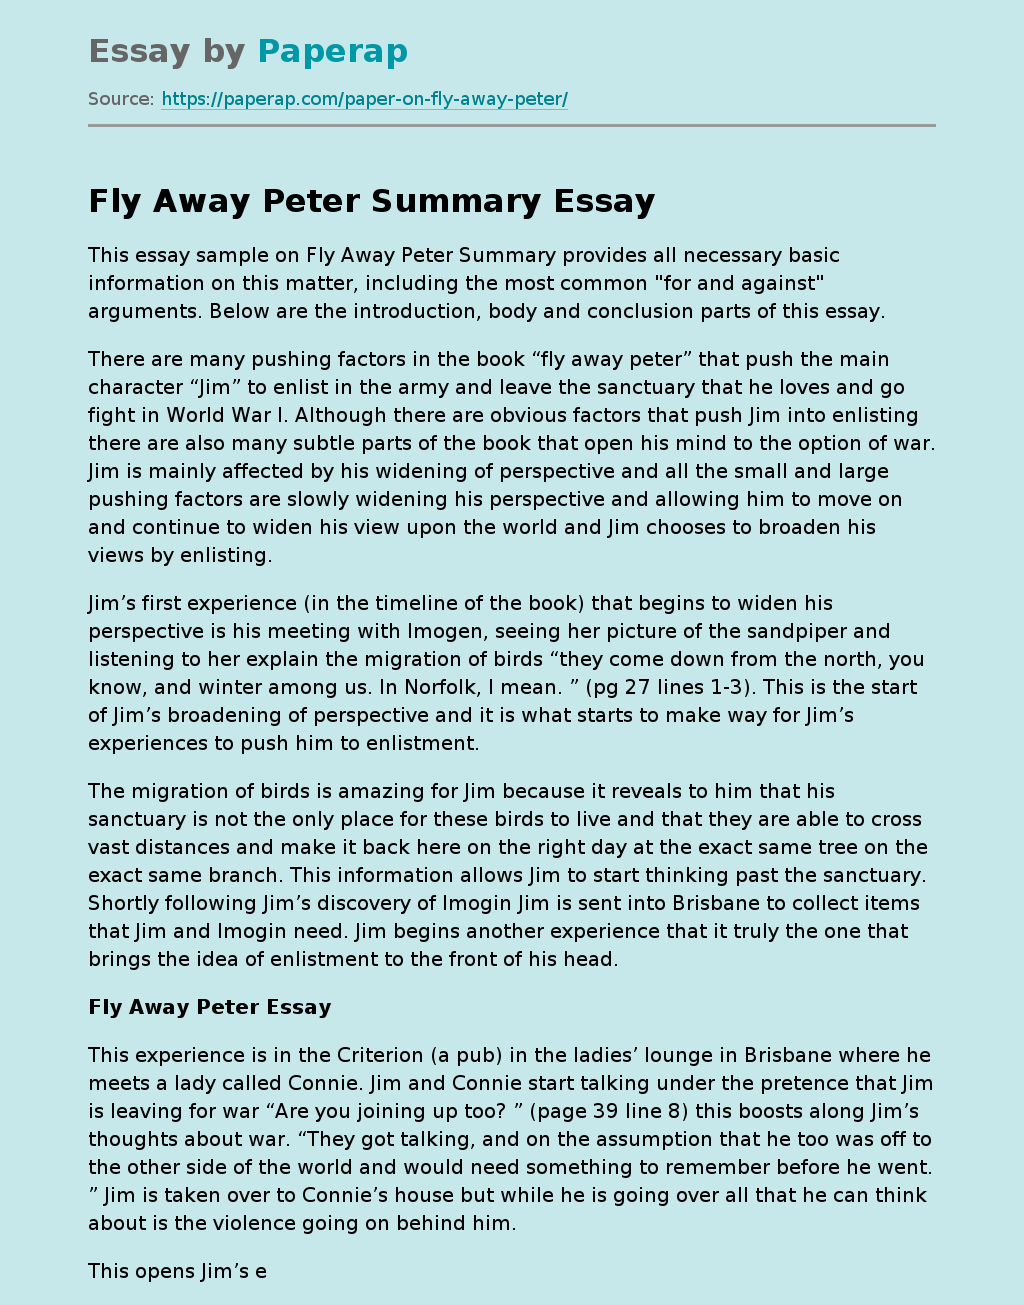 Fly Away Peter Summary